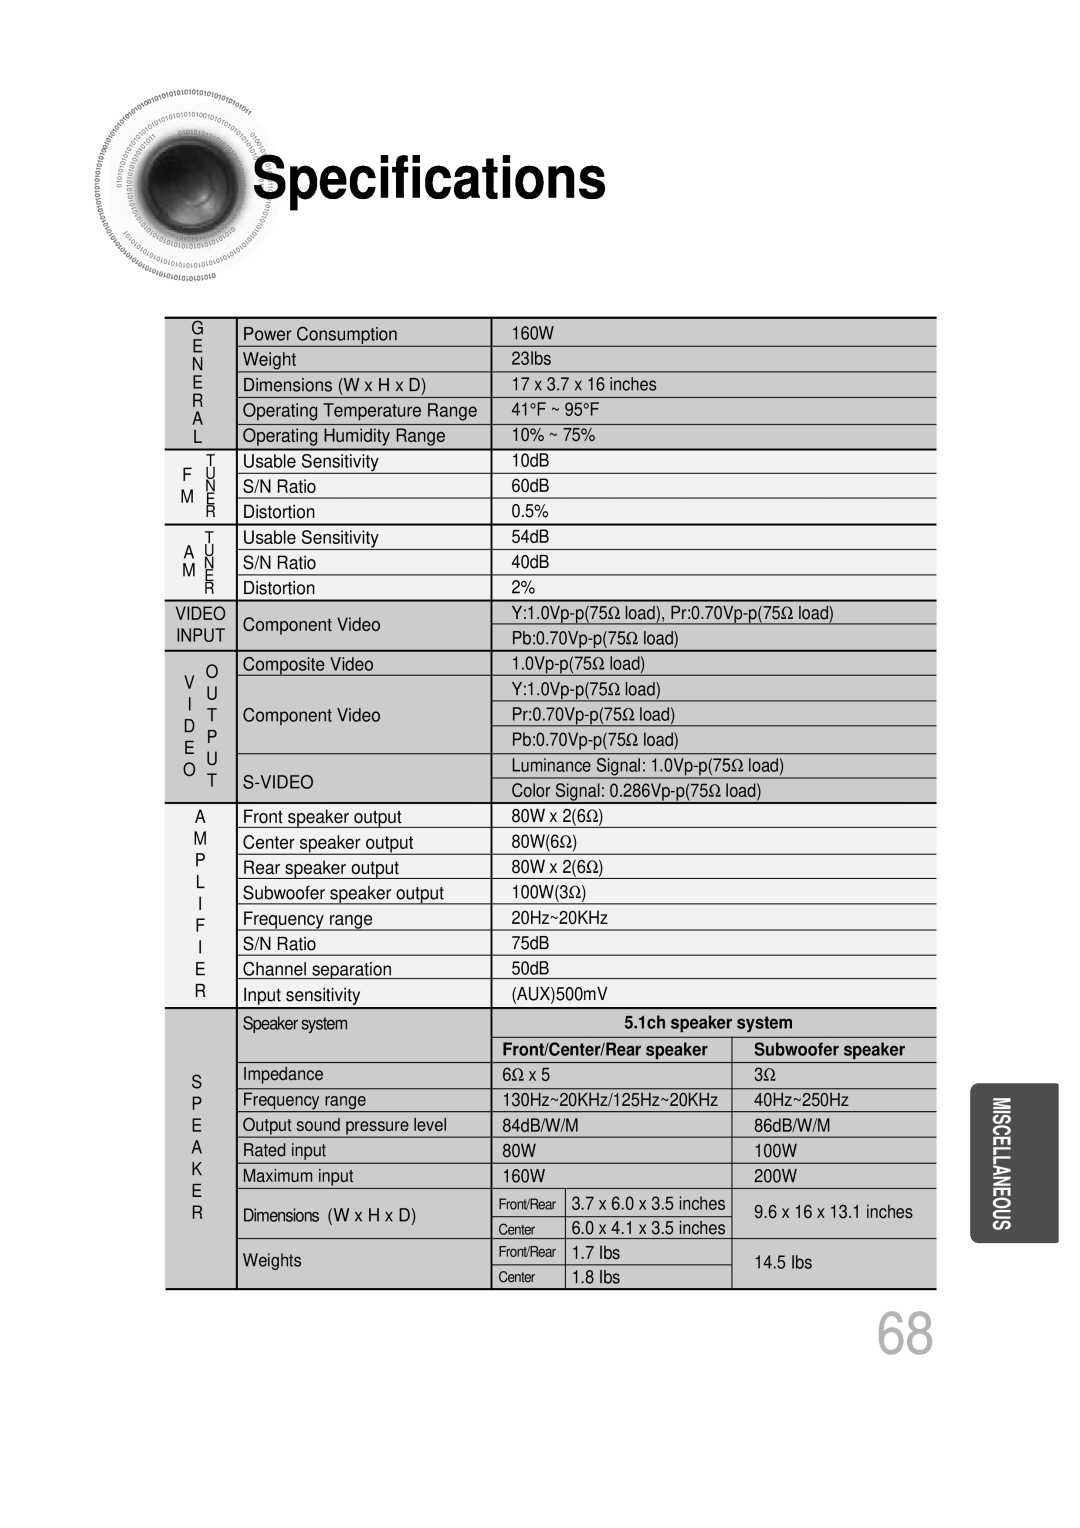 Samsung HT-DB600 instruction manual Specifications, 5.1ch speaker system, Front/Center/Rear speaker, Subwoofer speaker 